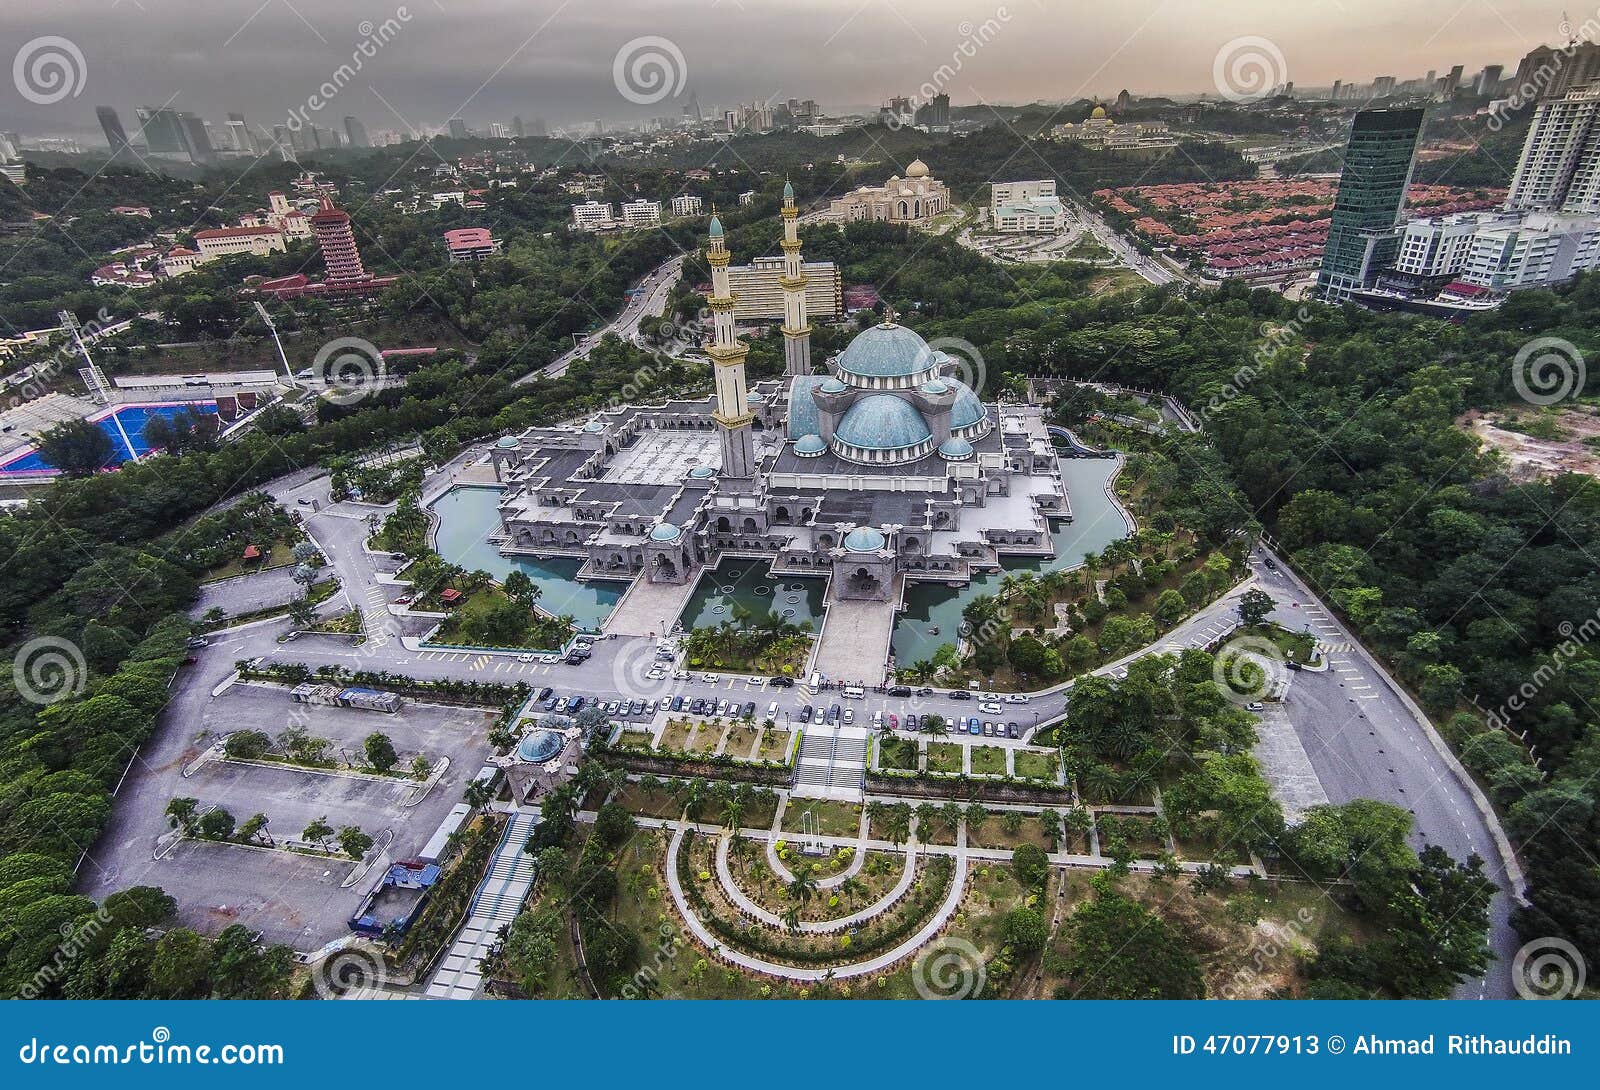 Aswana Cliche Malaysia Federal Territory Mosque Masjid Wilayah Persekutuan